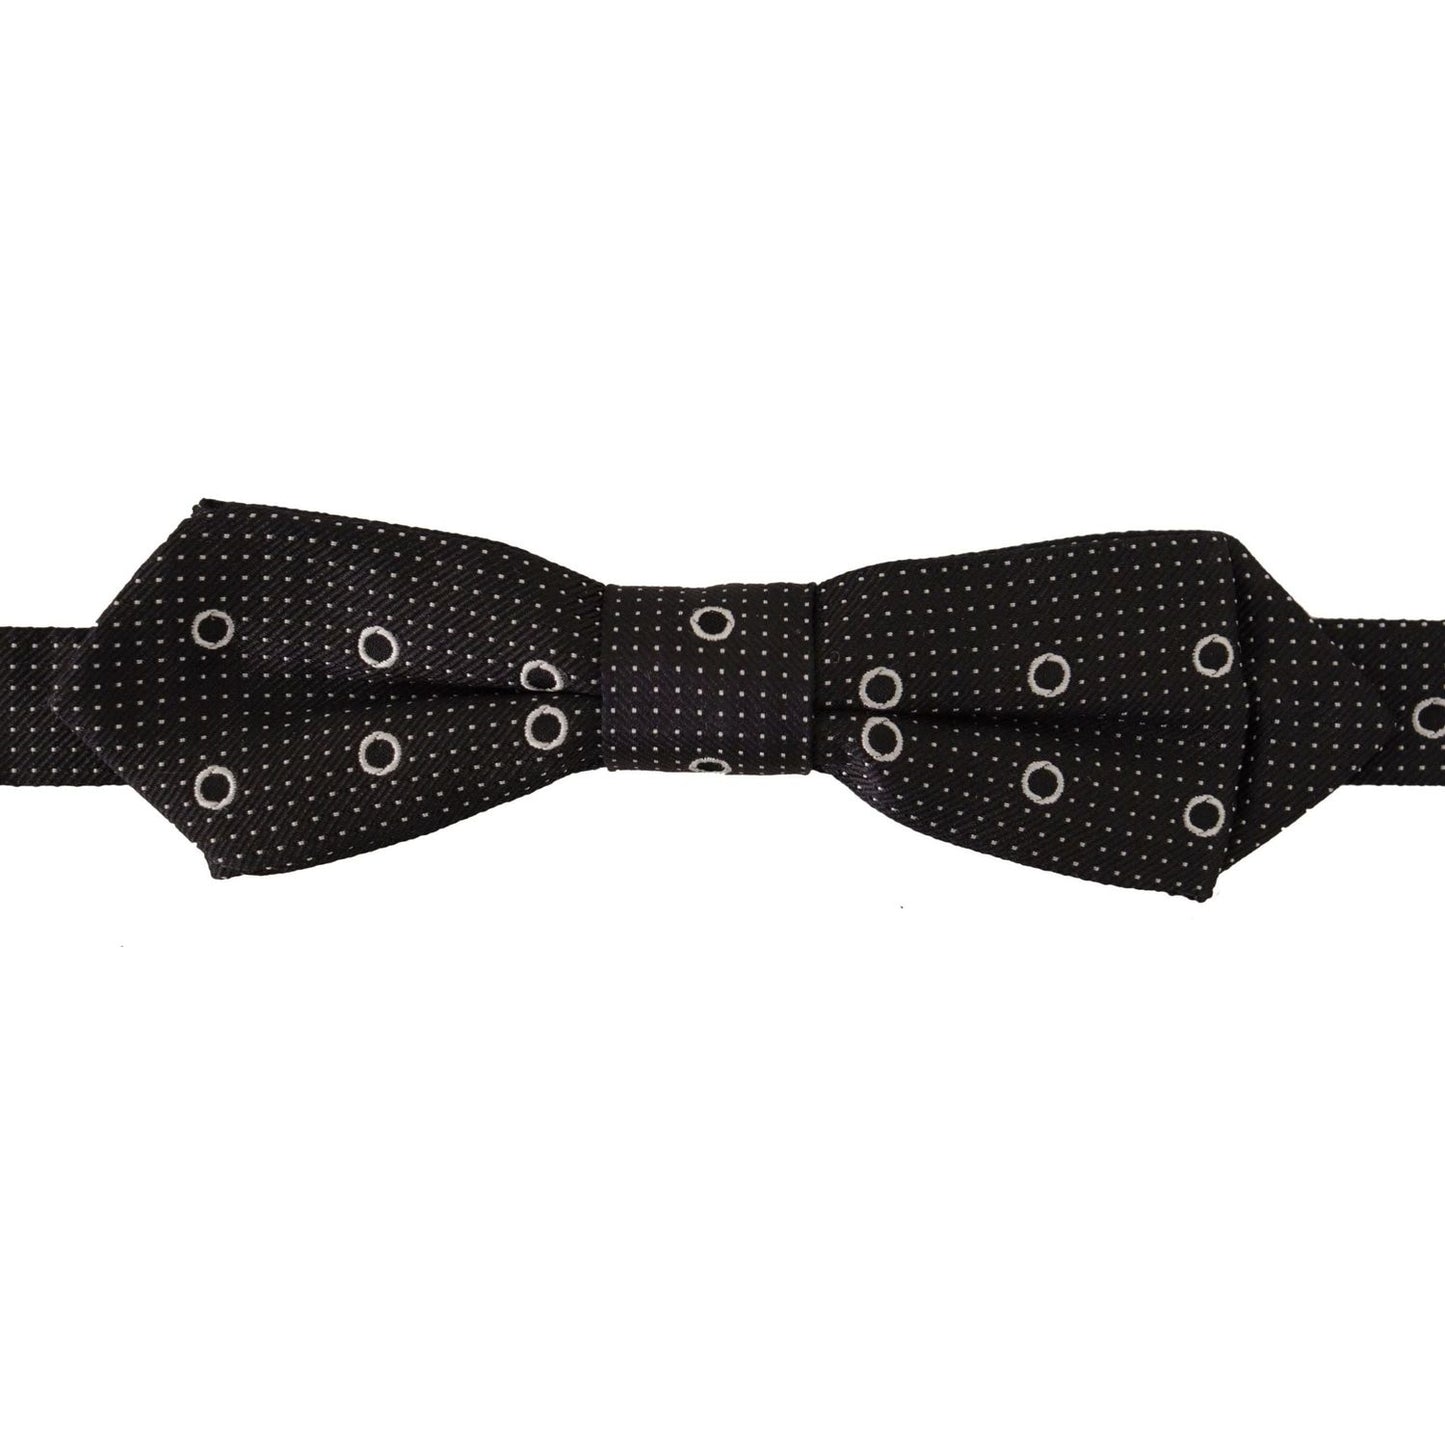 Polka Dot Silk Bow Tie in Black and White